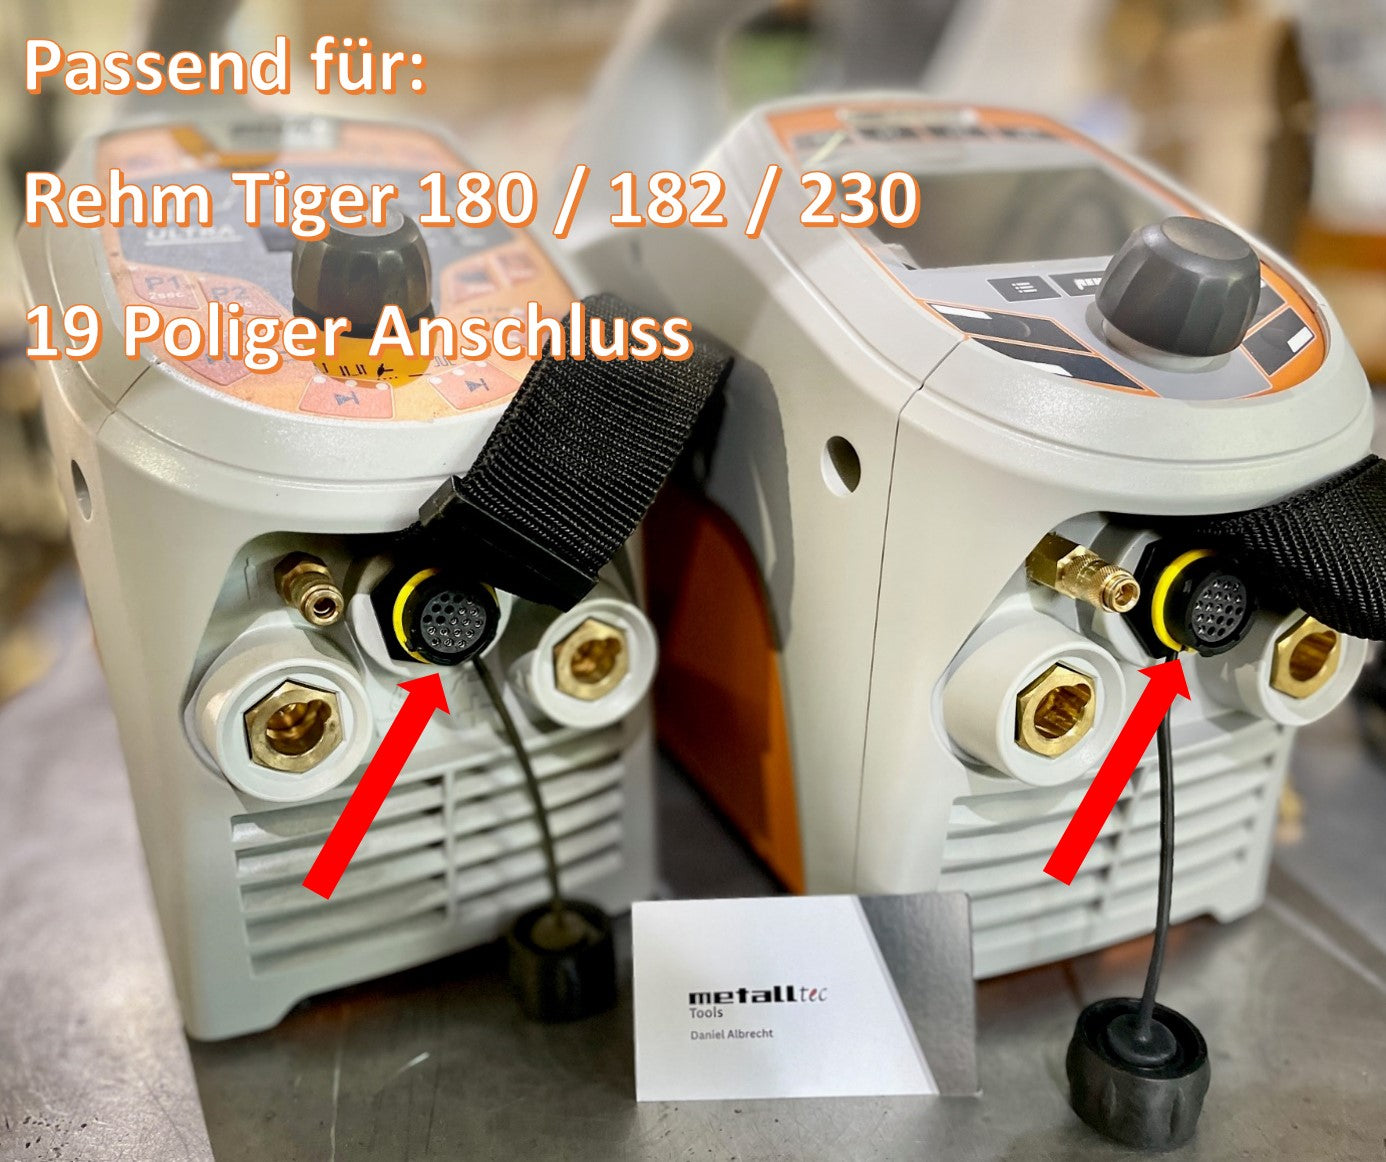 Torche de soudage TIG AQ-310 refroidie à l'eau *Rehm Tiger/Invertig* TIGZONE*